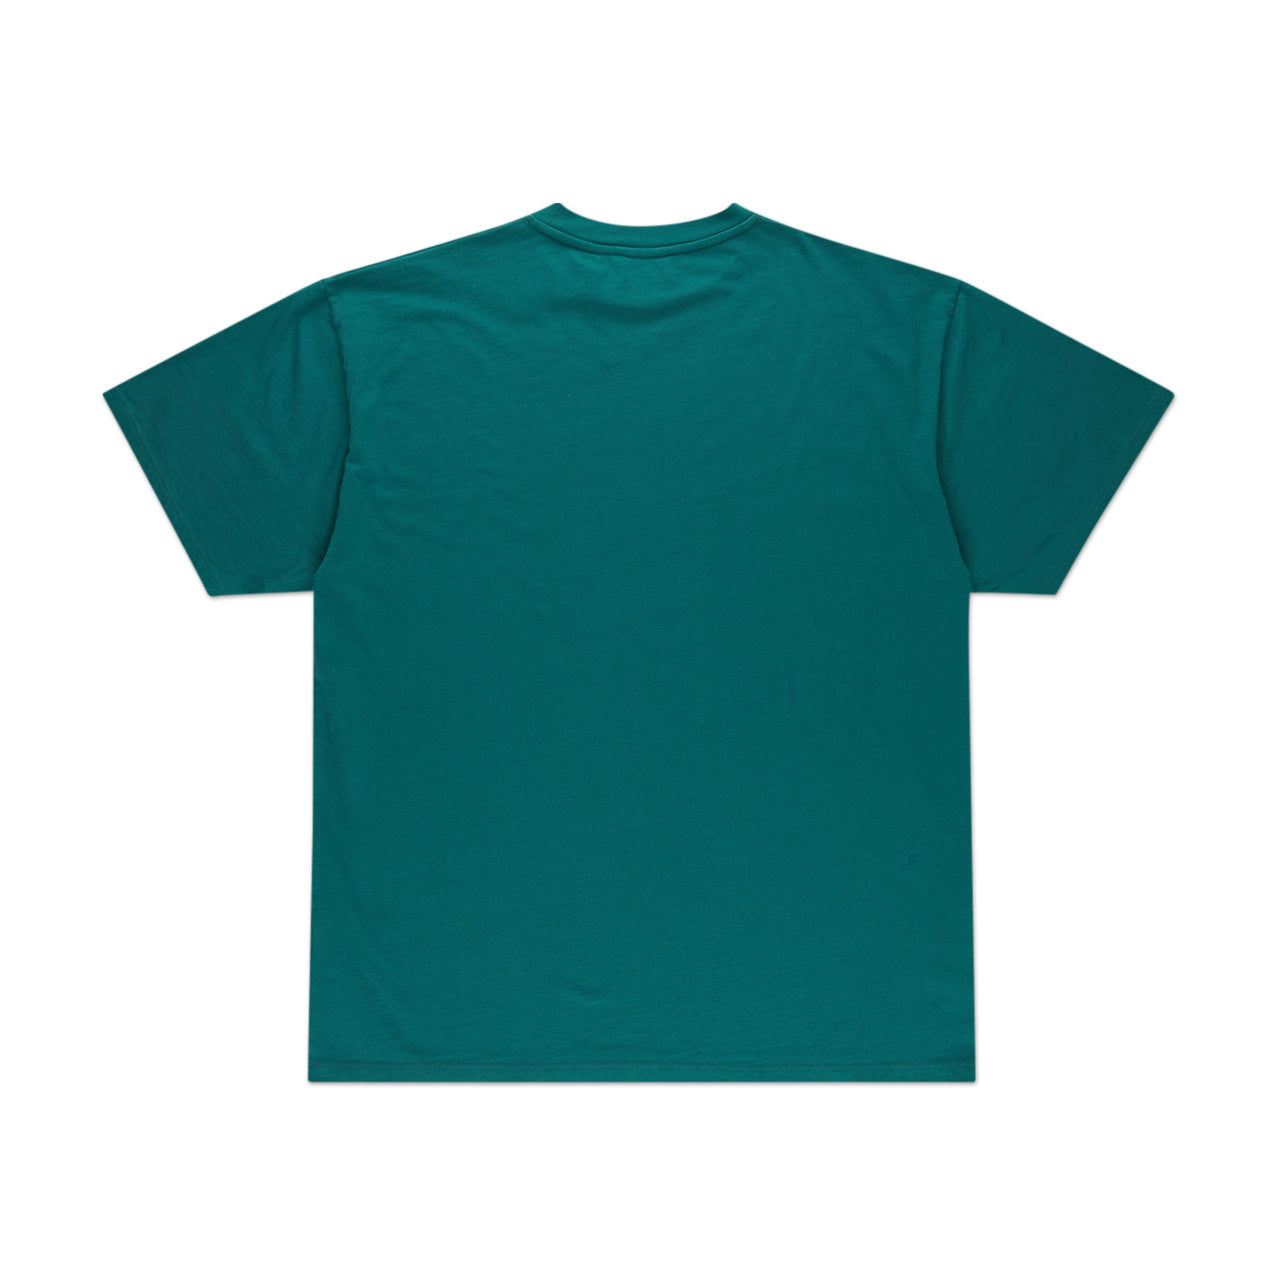 aries mini problemo t-shirt (grün)